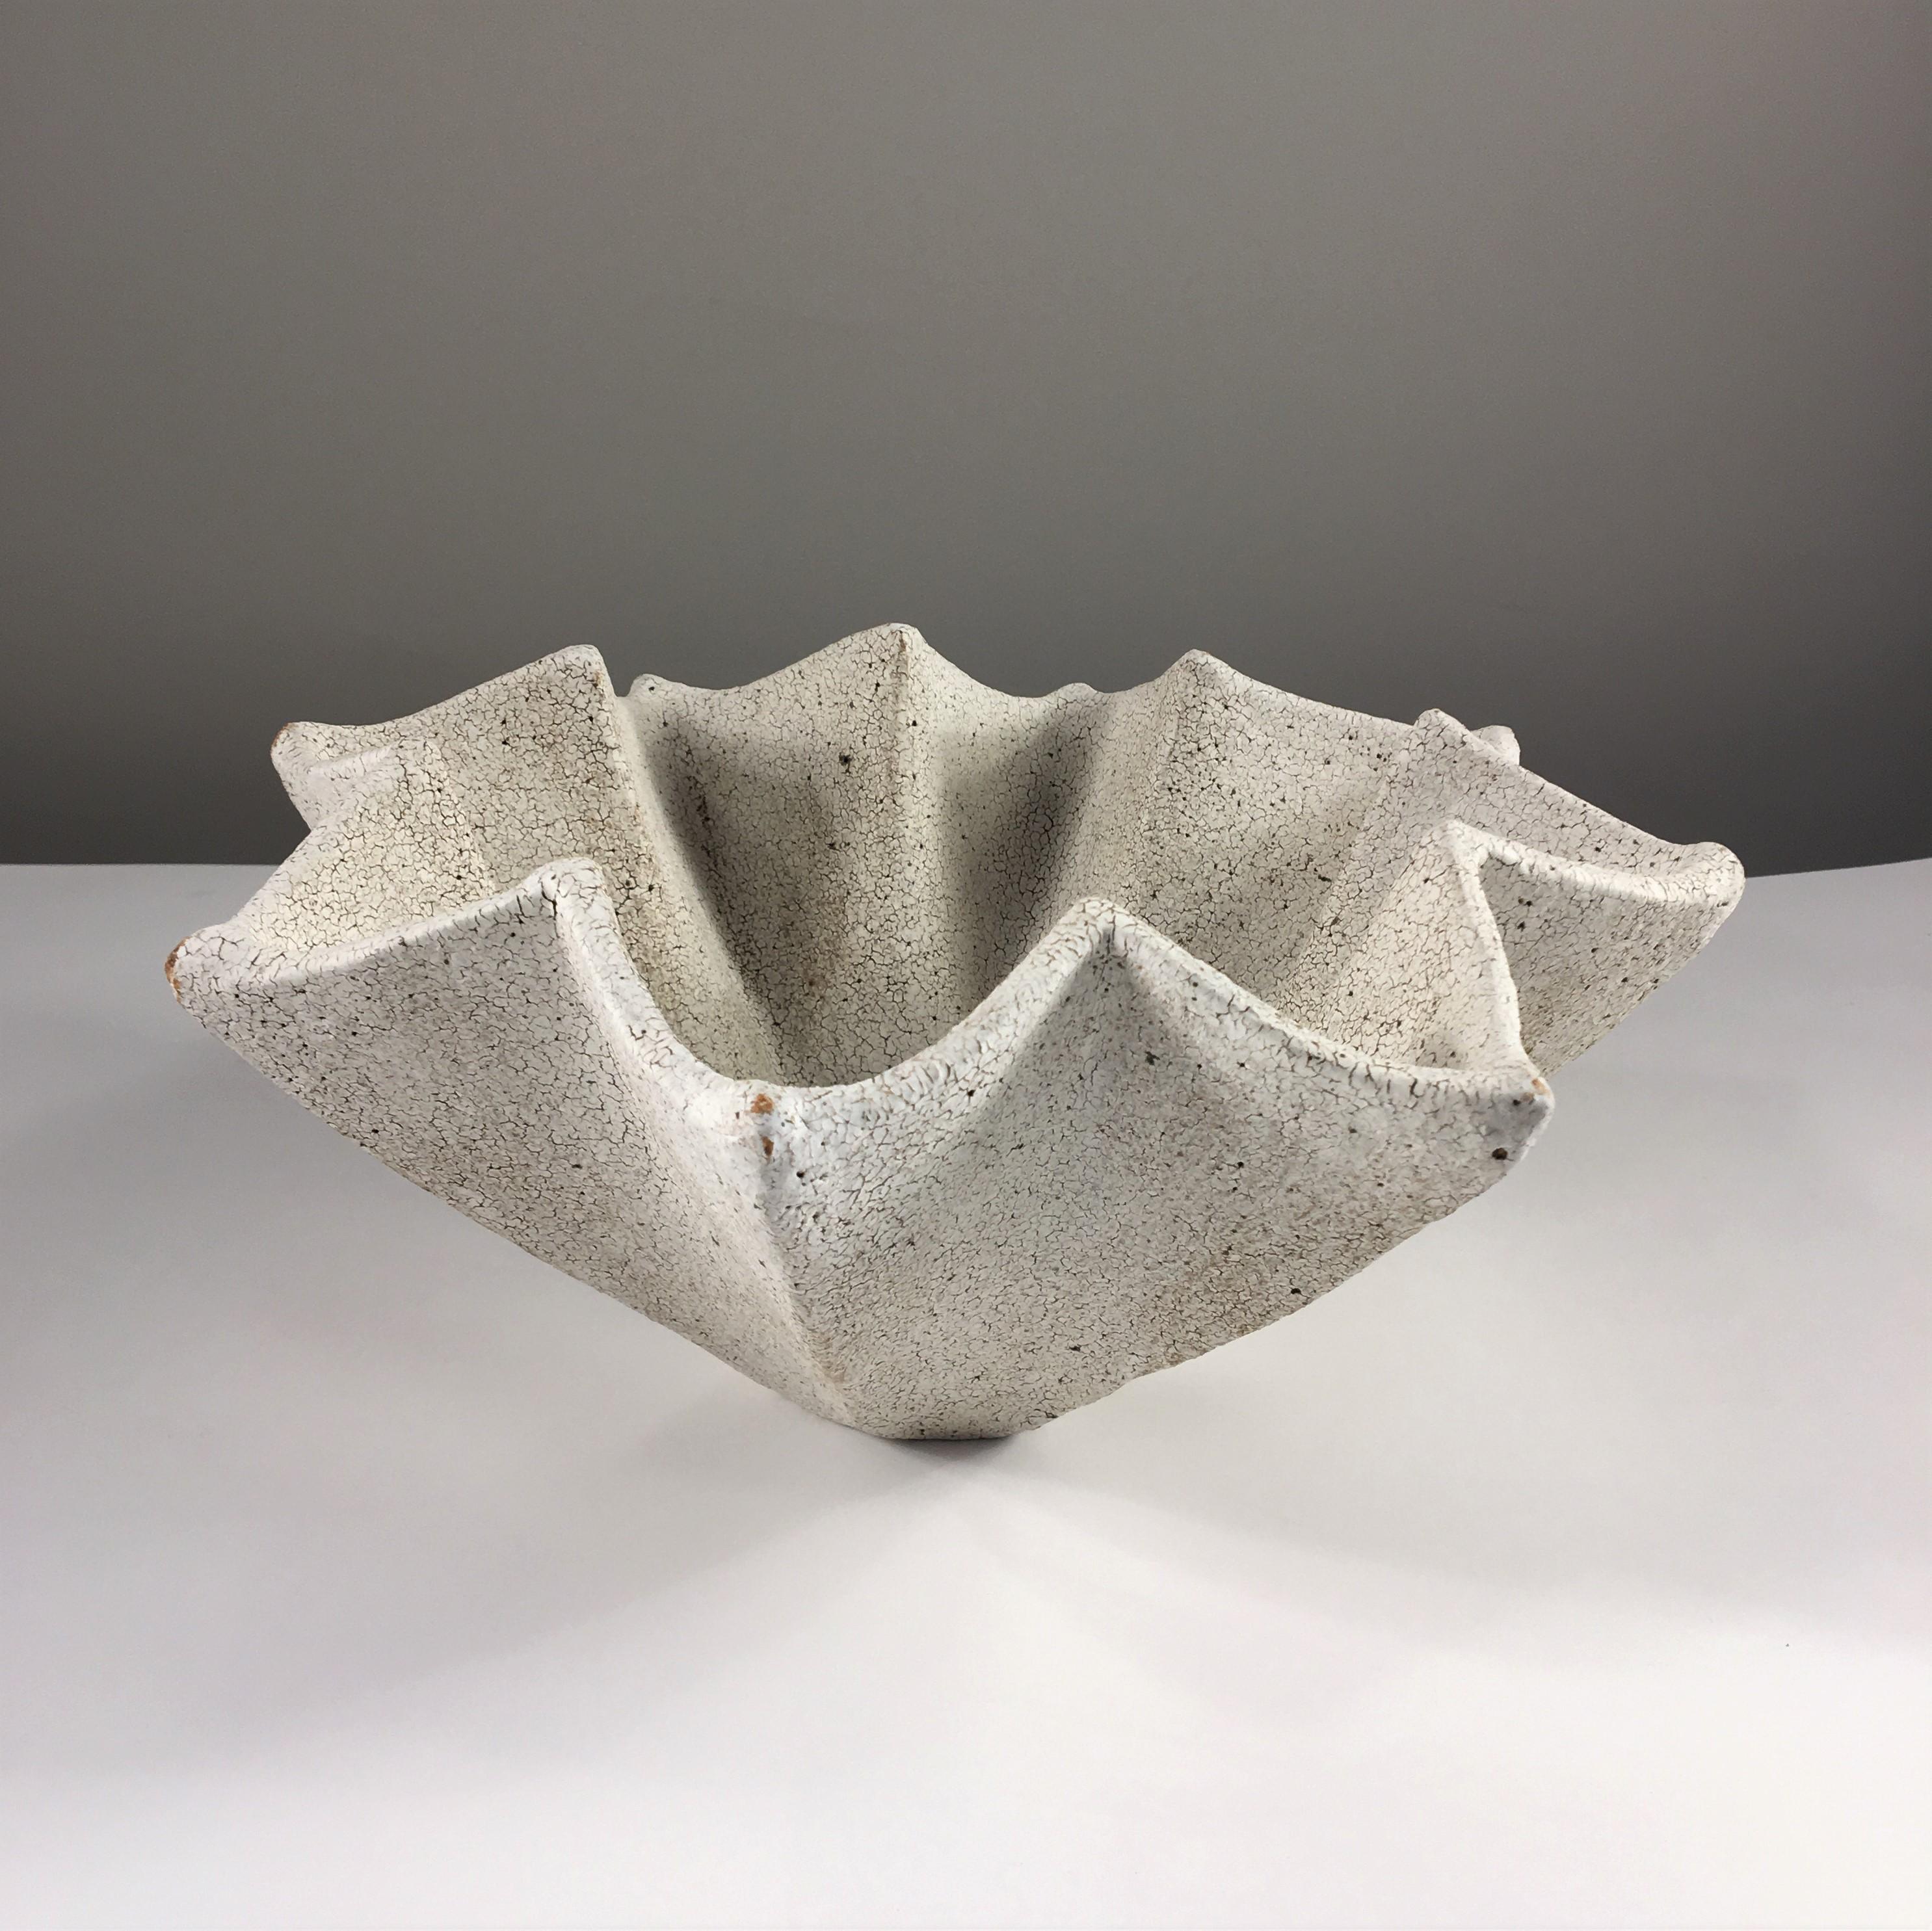 Ceramic star bowl by Yumiko Kuga. Dimensions: Height 5